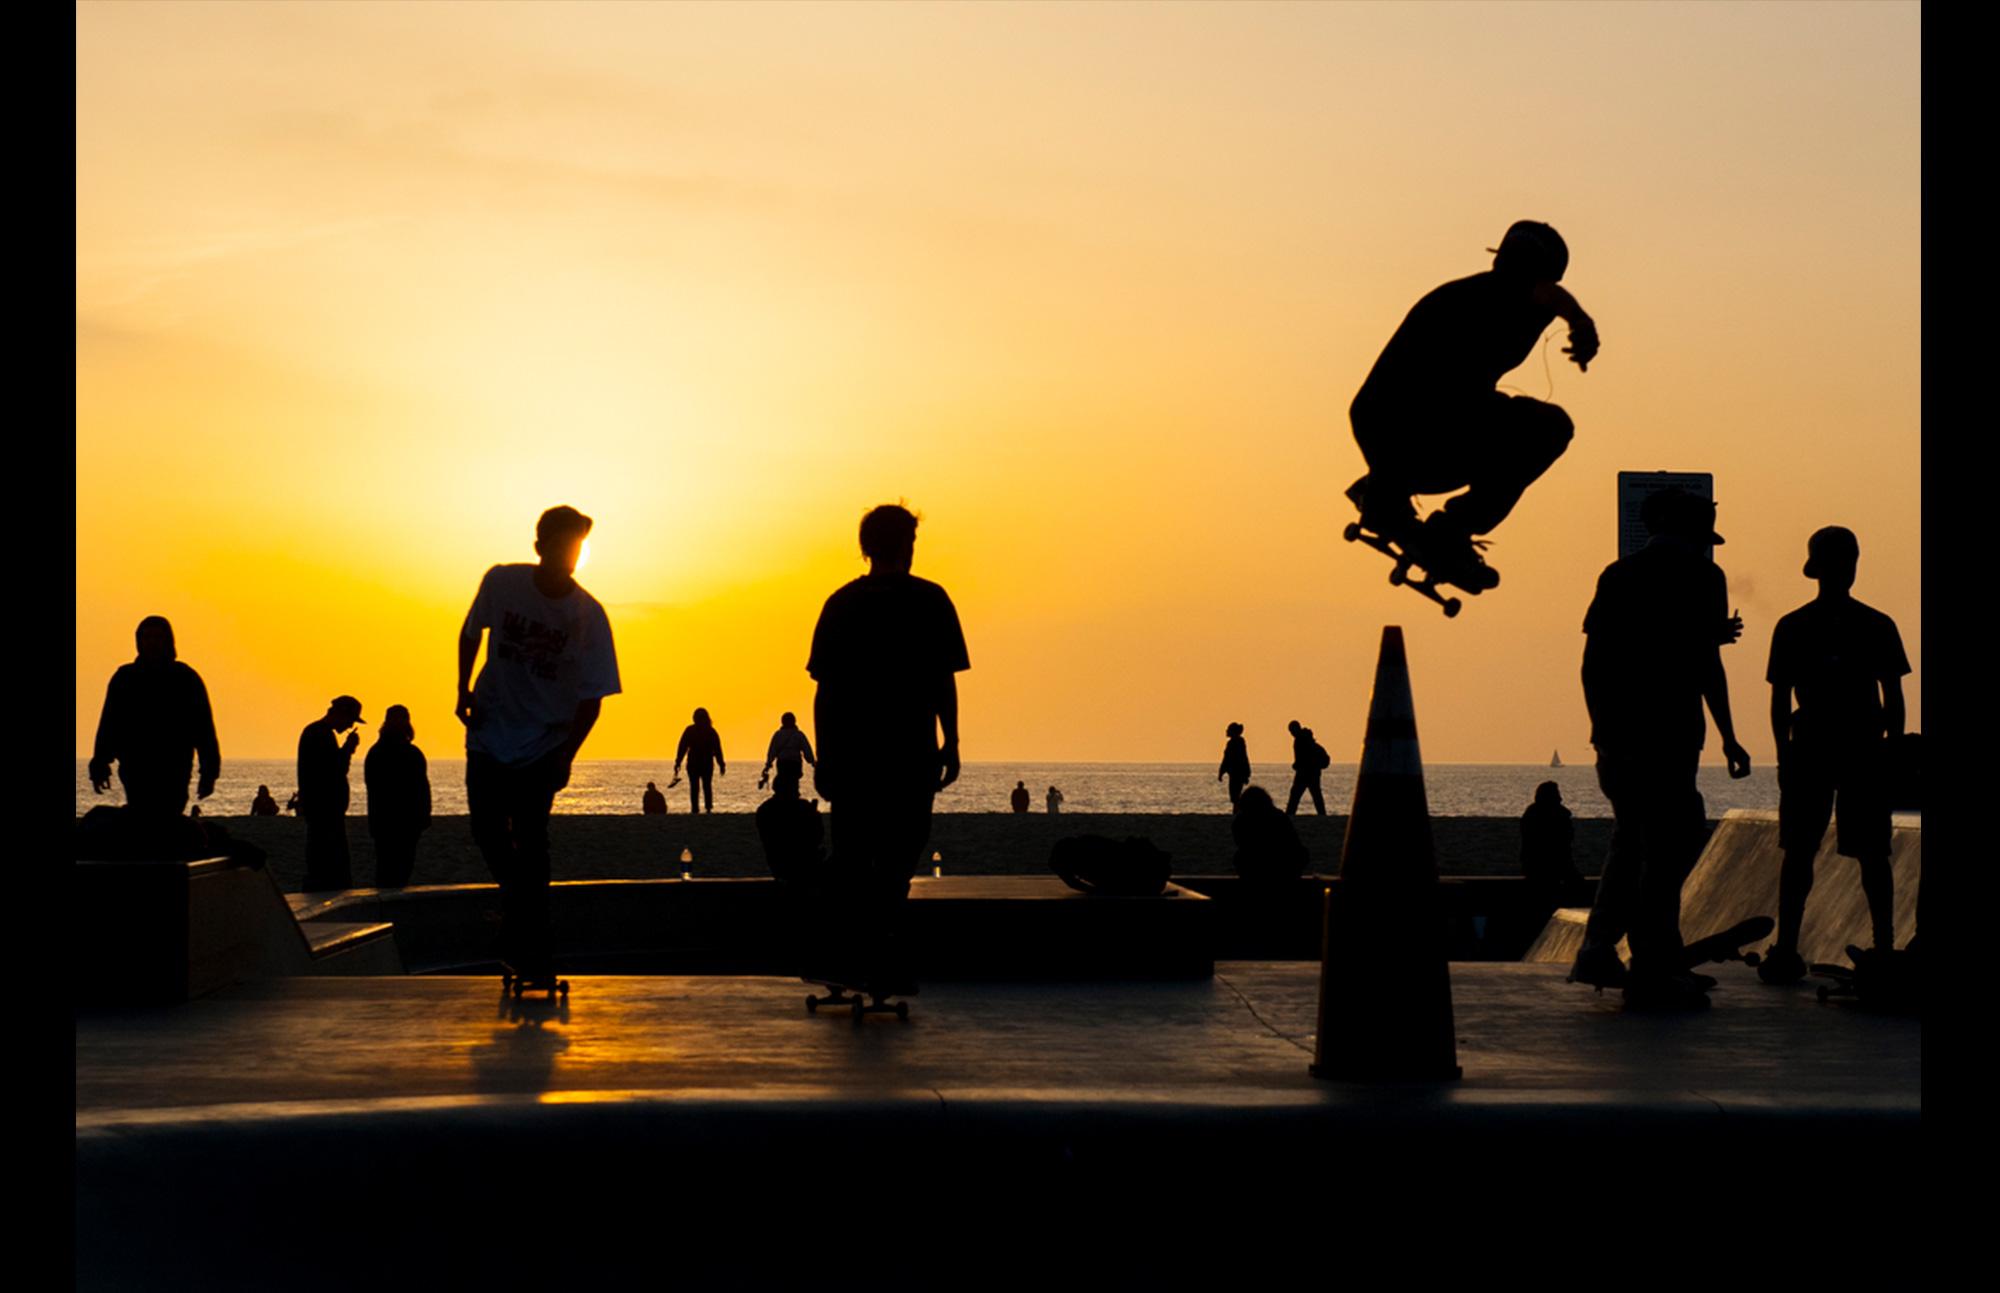 skateboarders' silhouettes